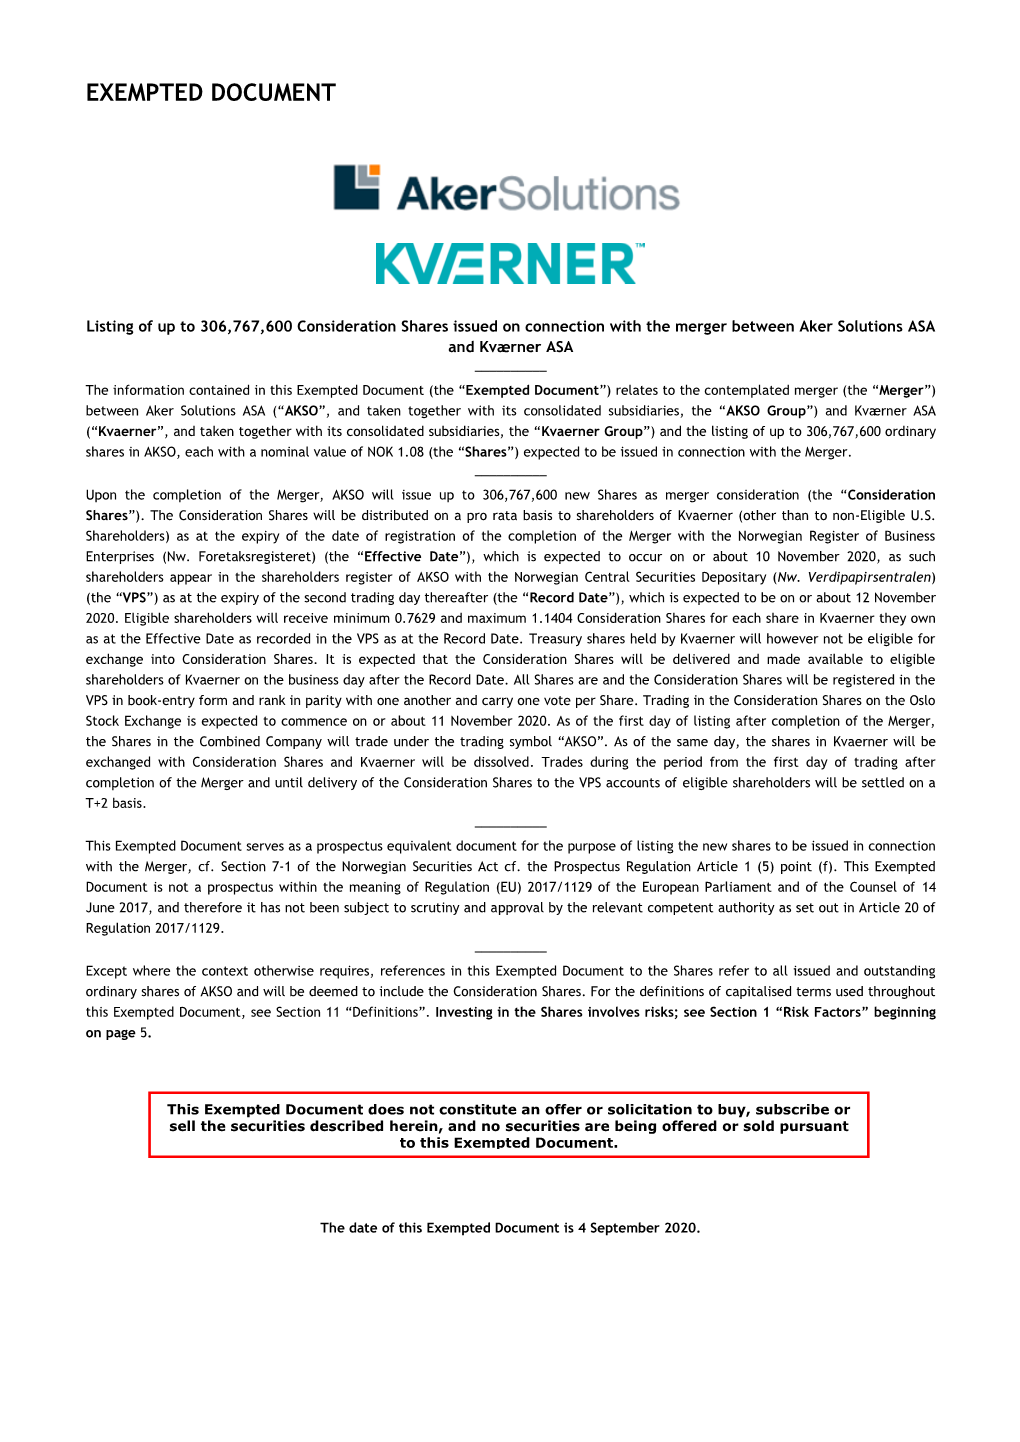 Exempted Document, Aker Solutions and Kvaerner, September 4, 2020